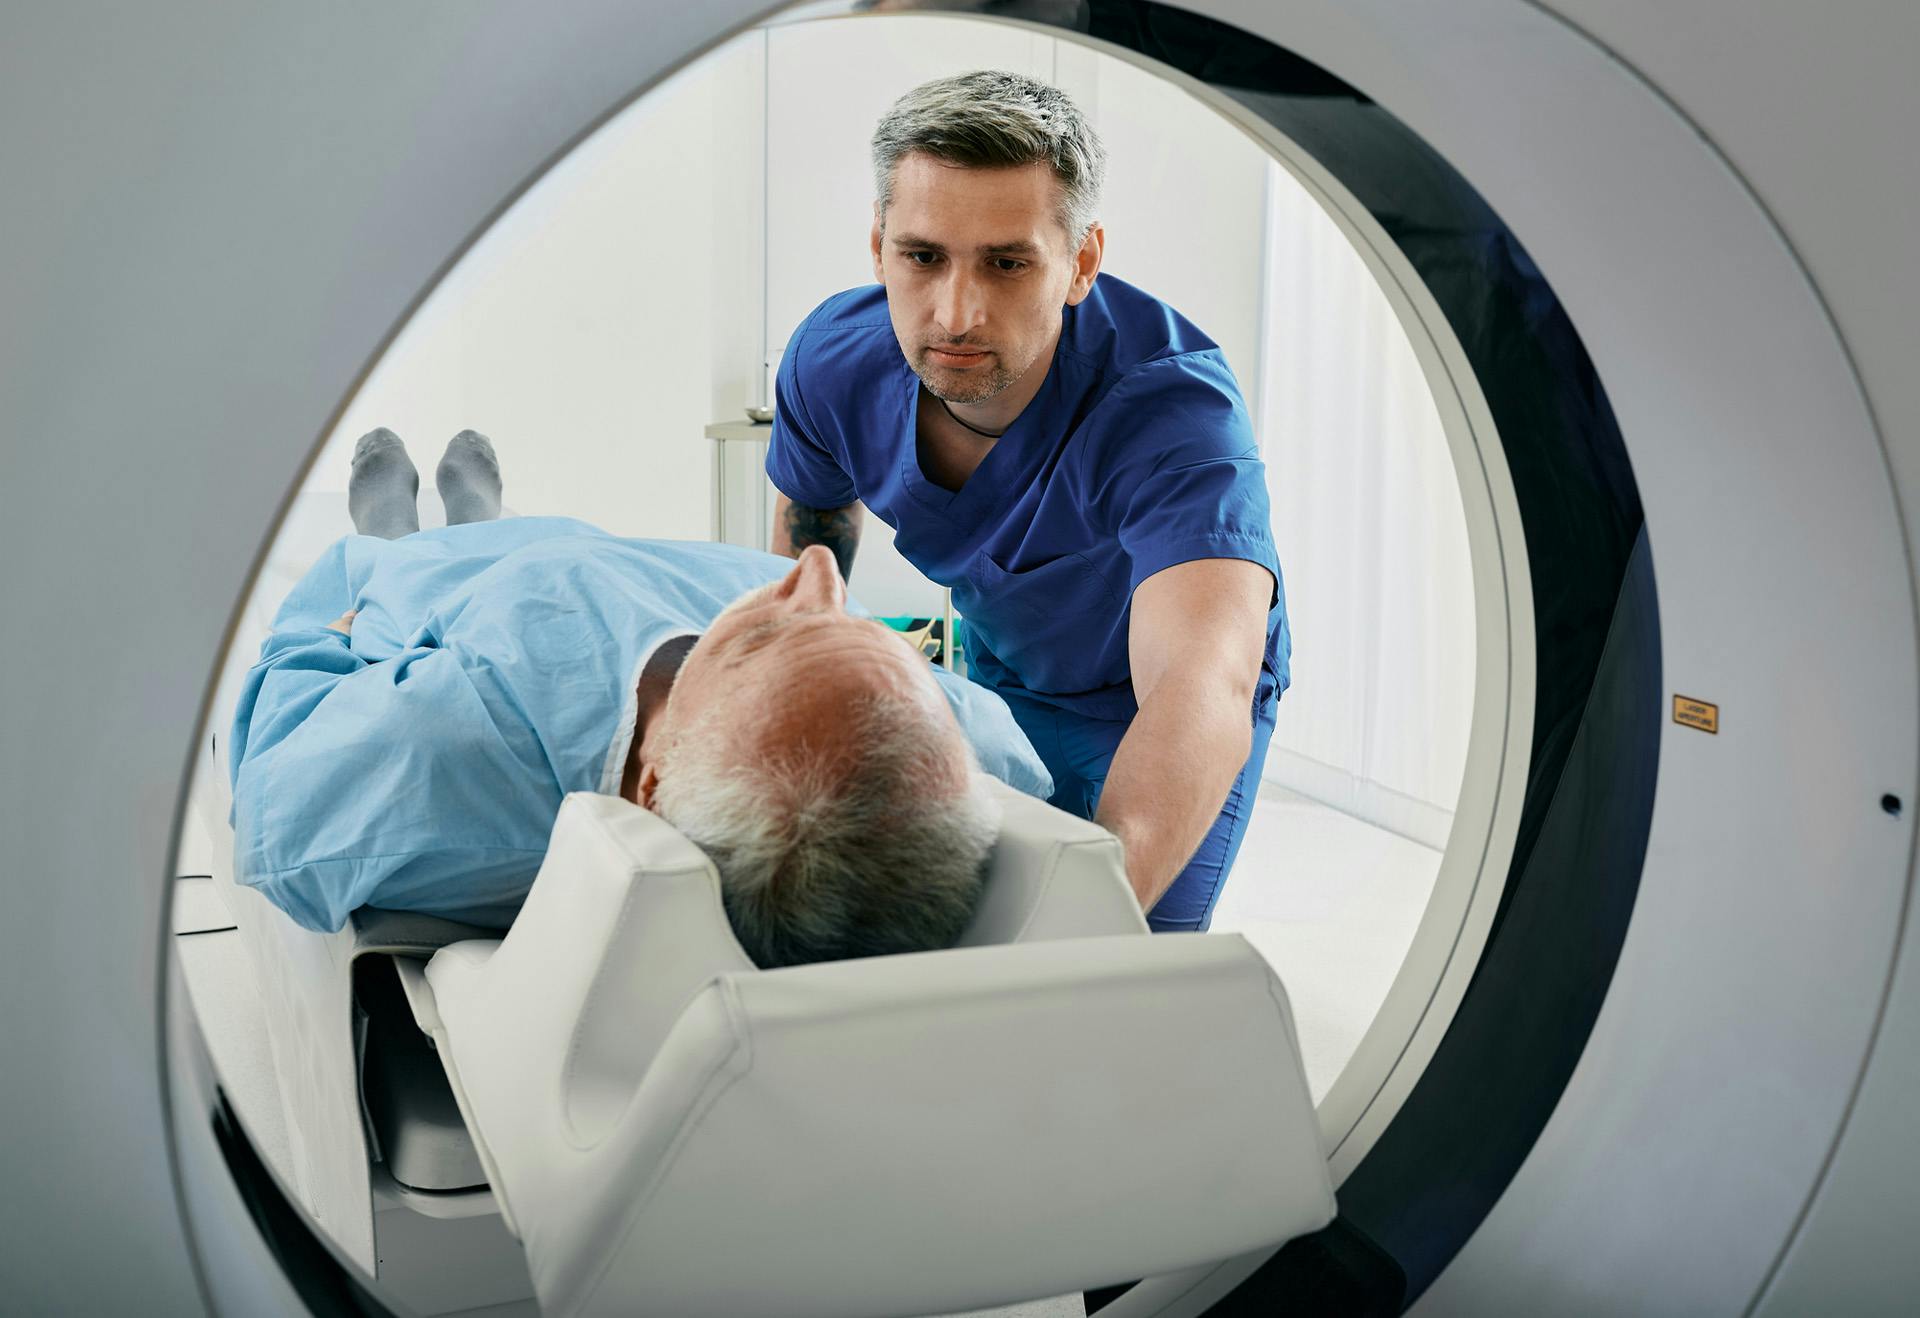 Man being pushed into an MRI machine.